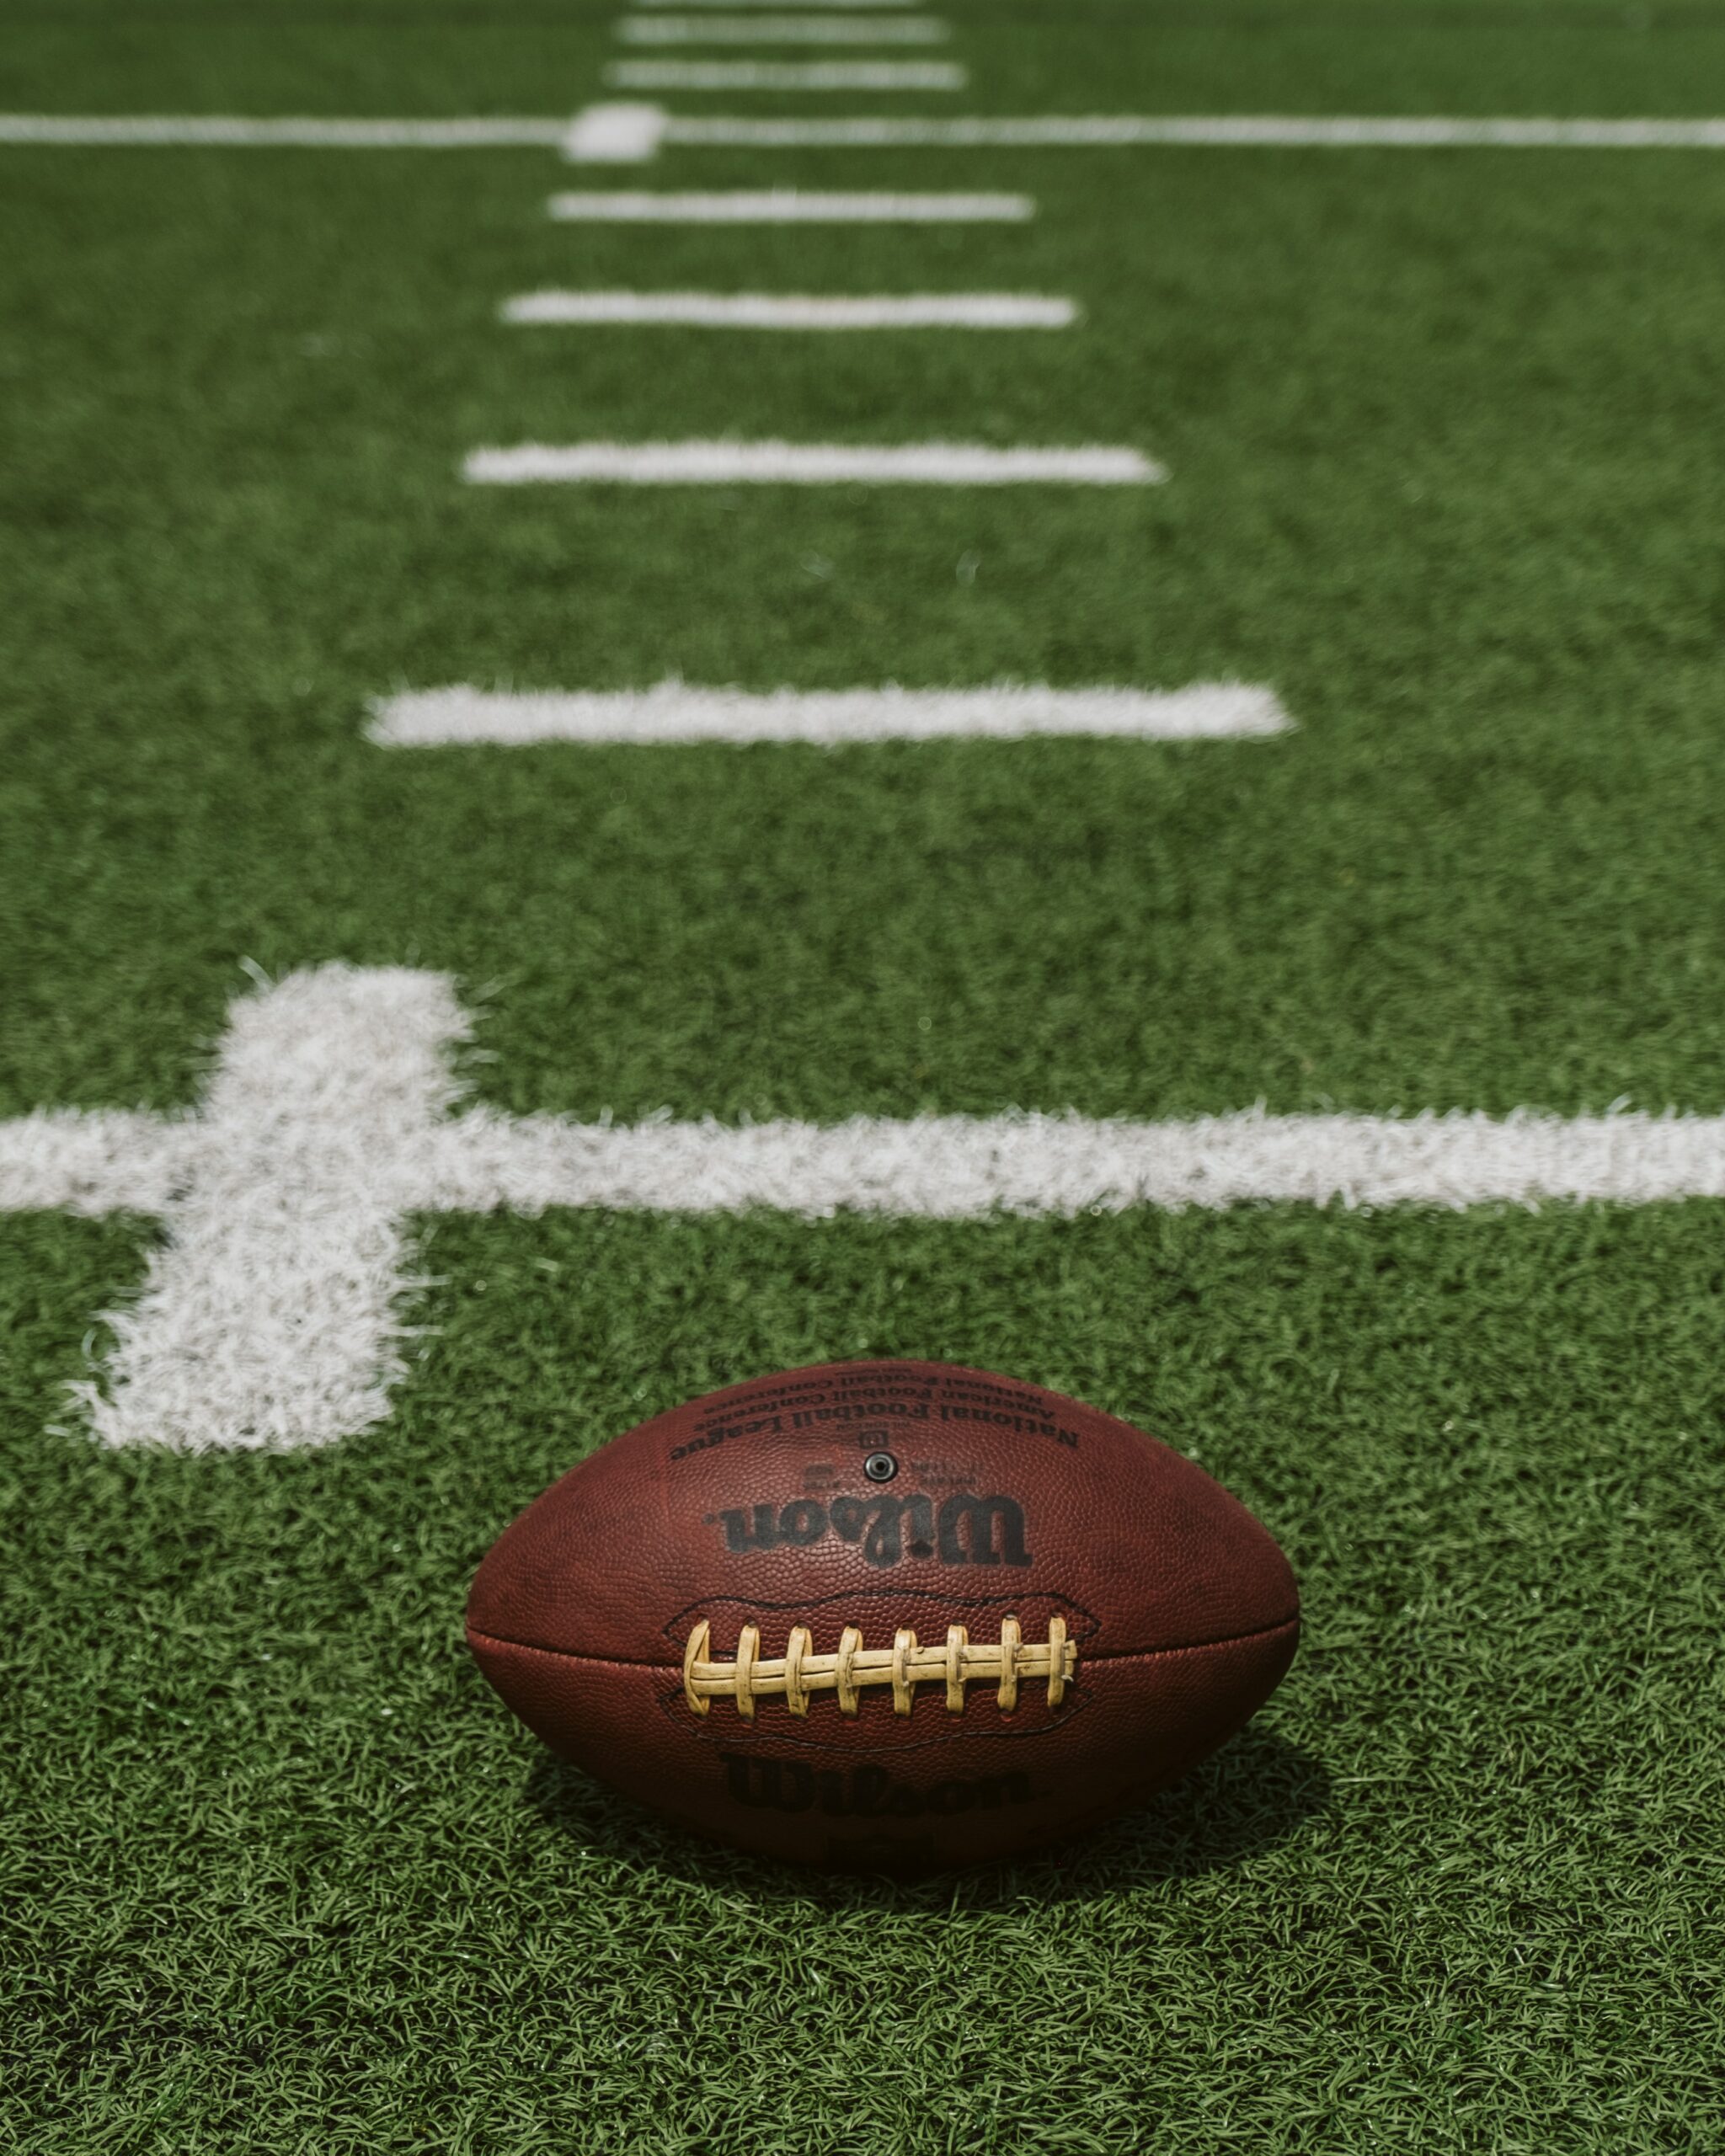 Up close shot of a football on an NFL field